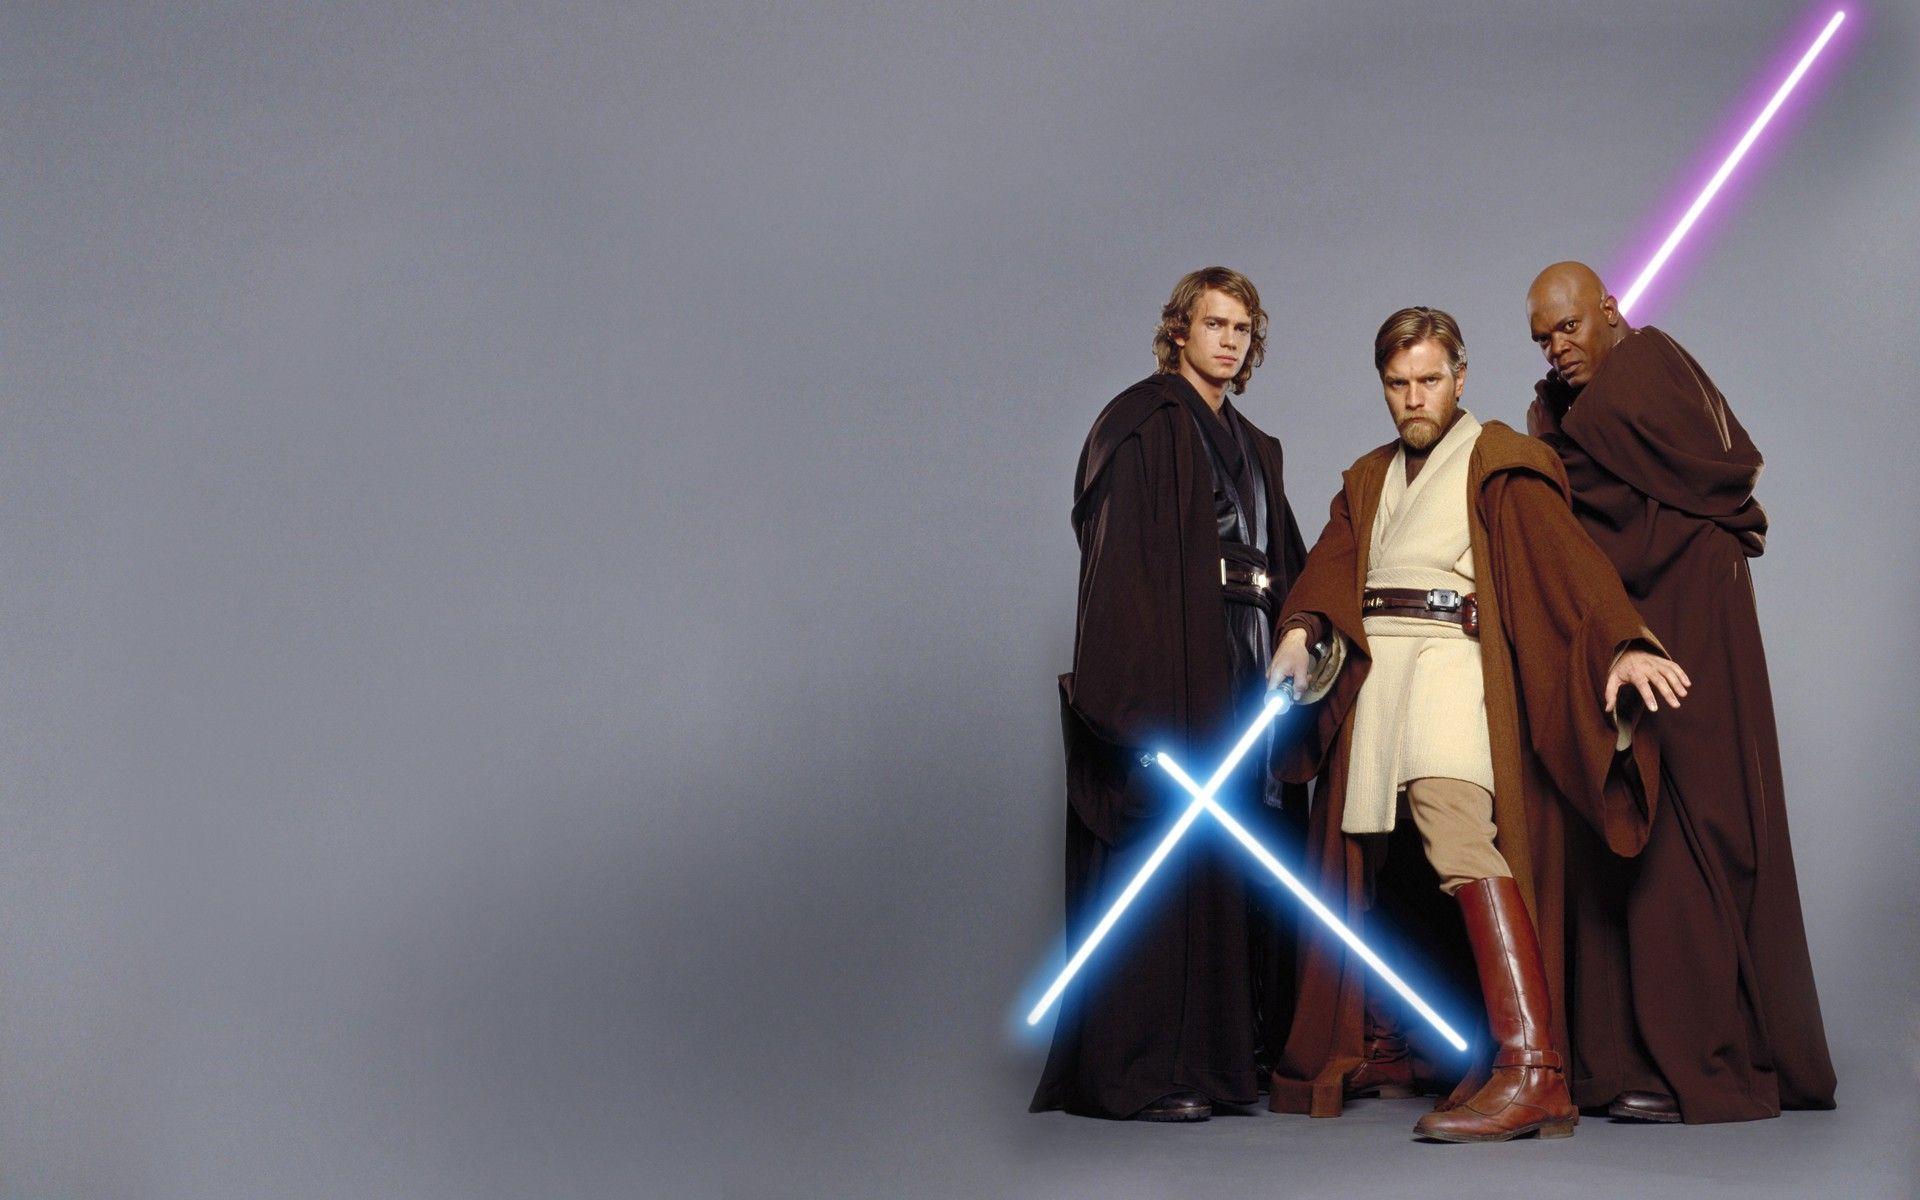 Star Wars, Lightsabers, Anakin Skywalker, Obi Wan Kenobi, Mace